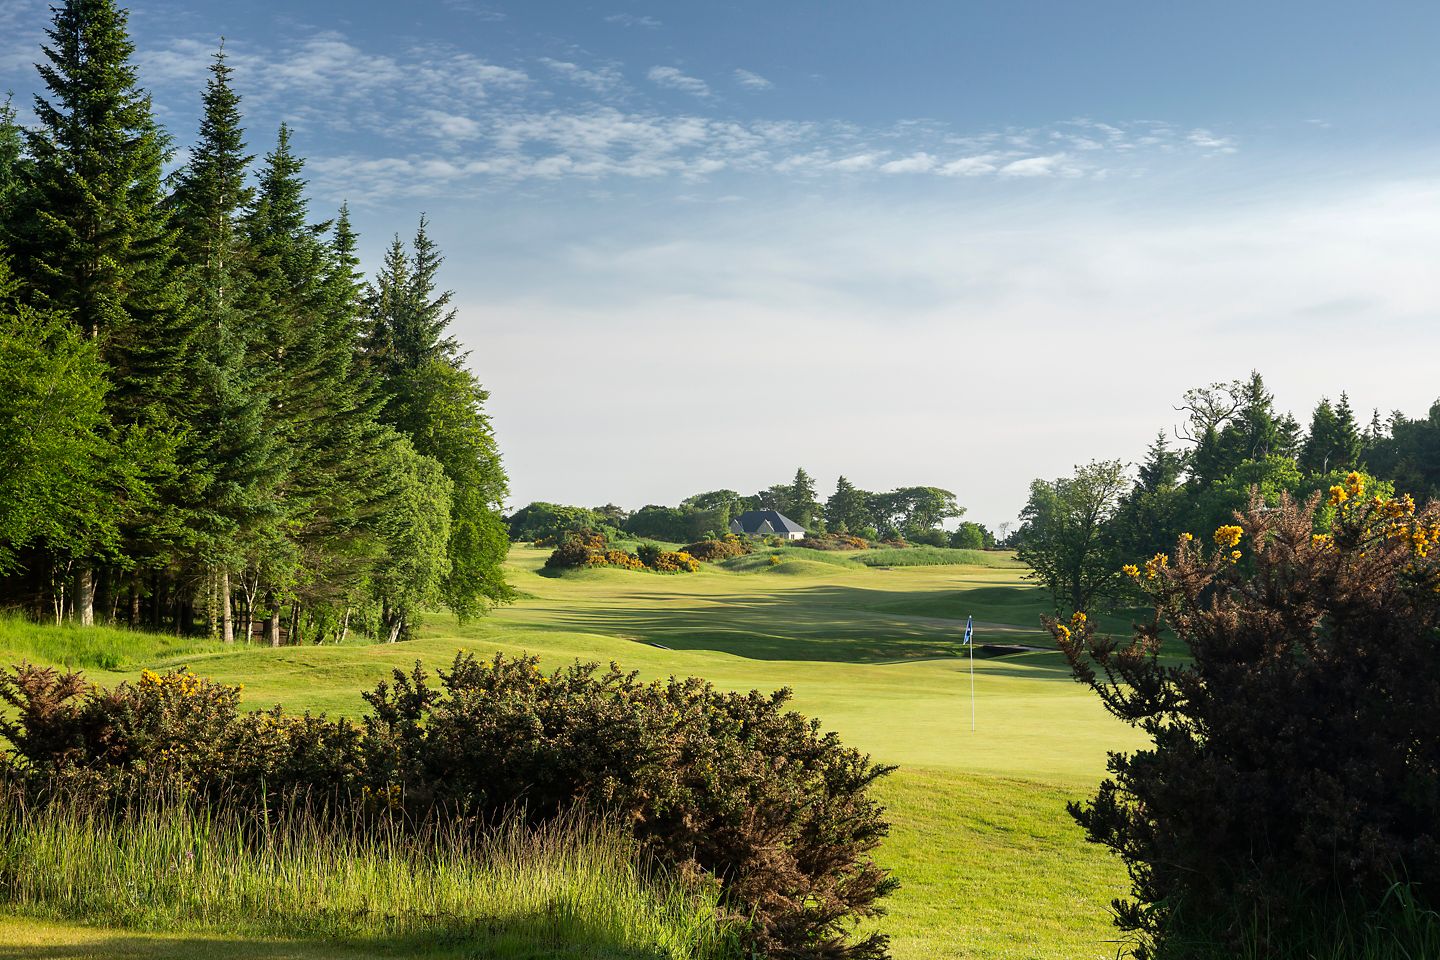 The Duke's Golf Course, St Andrews